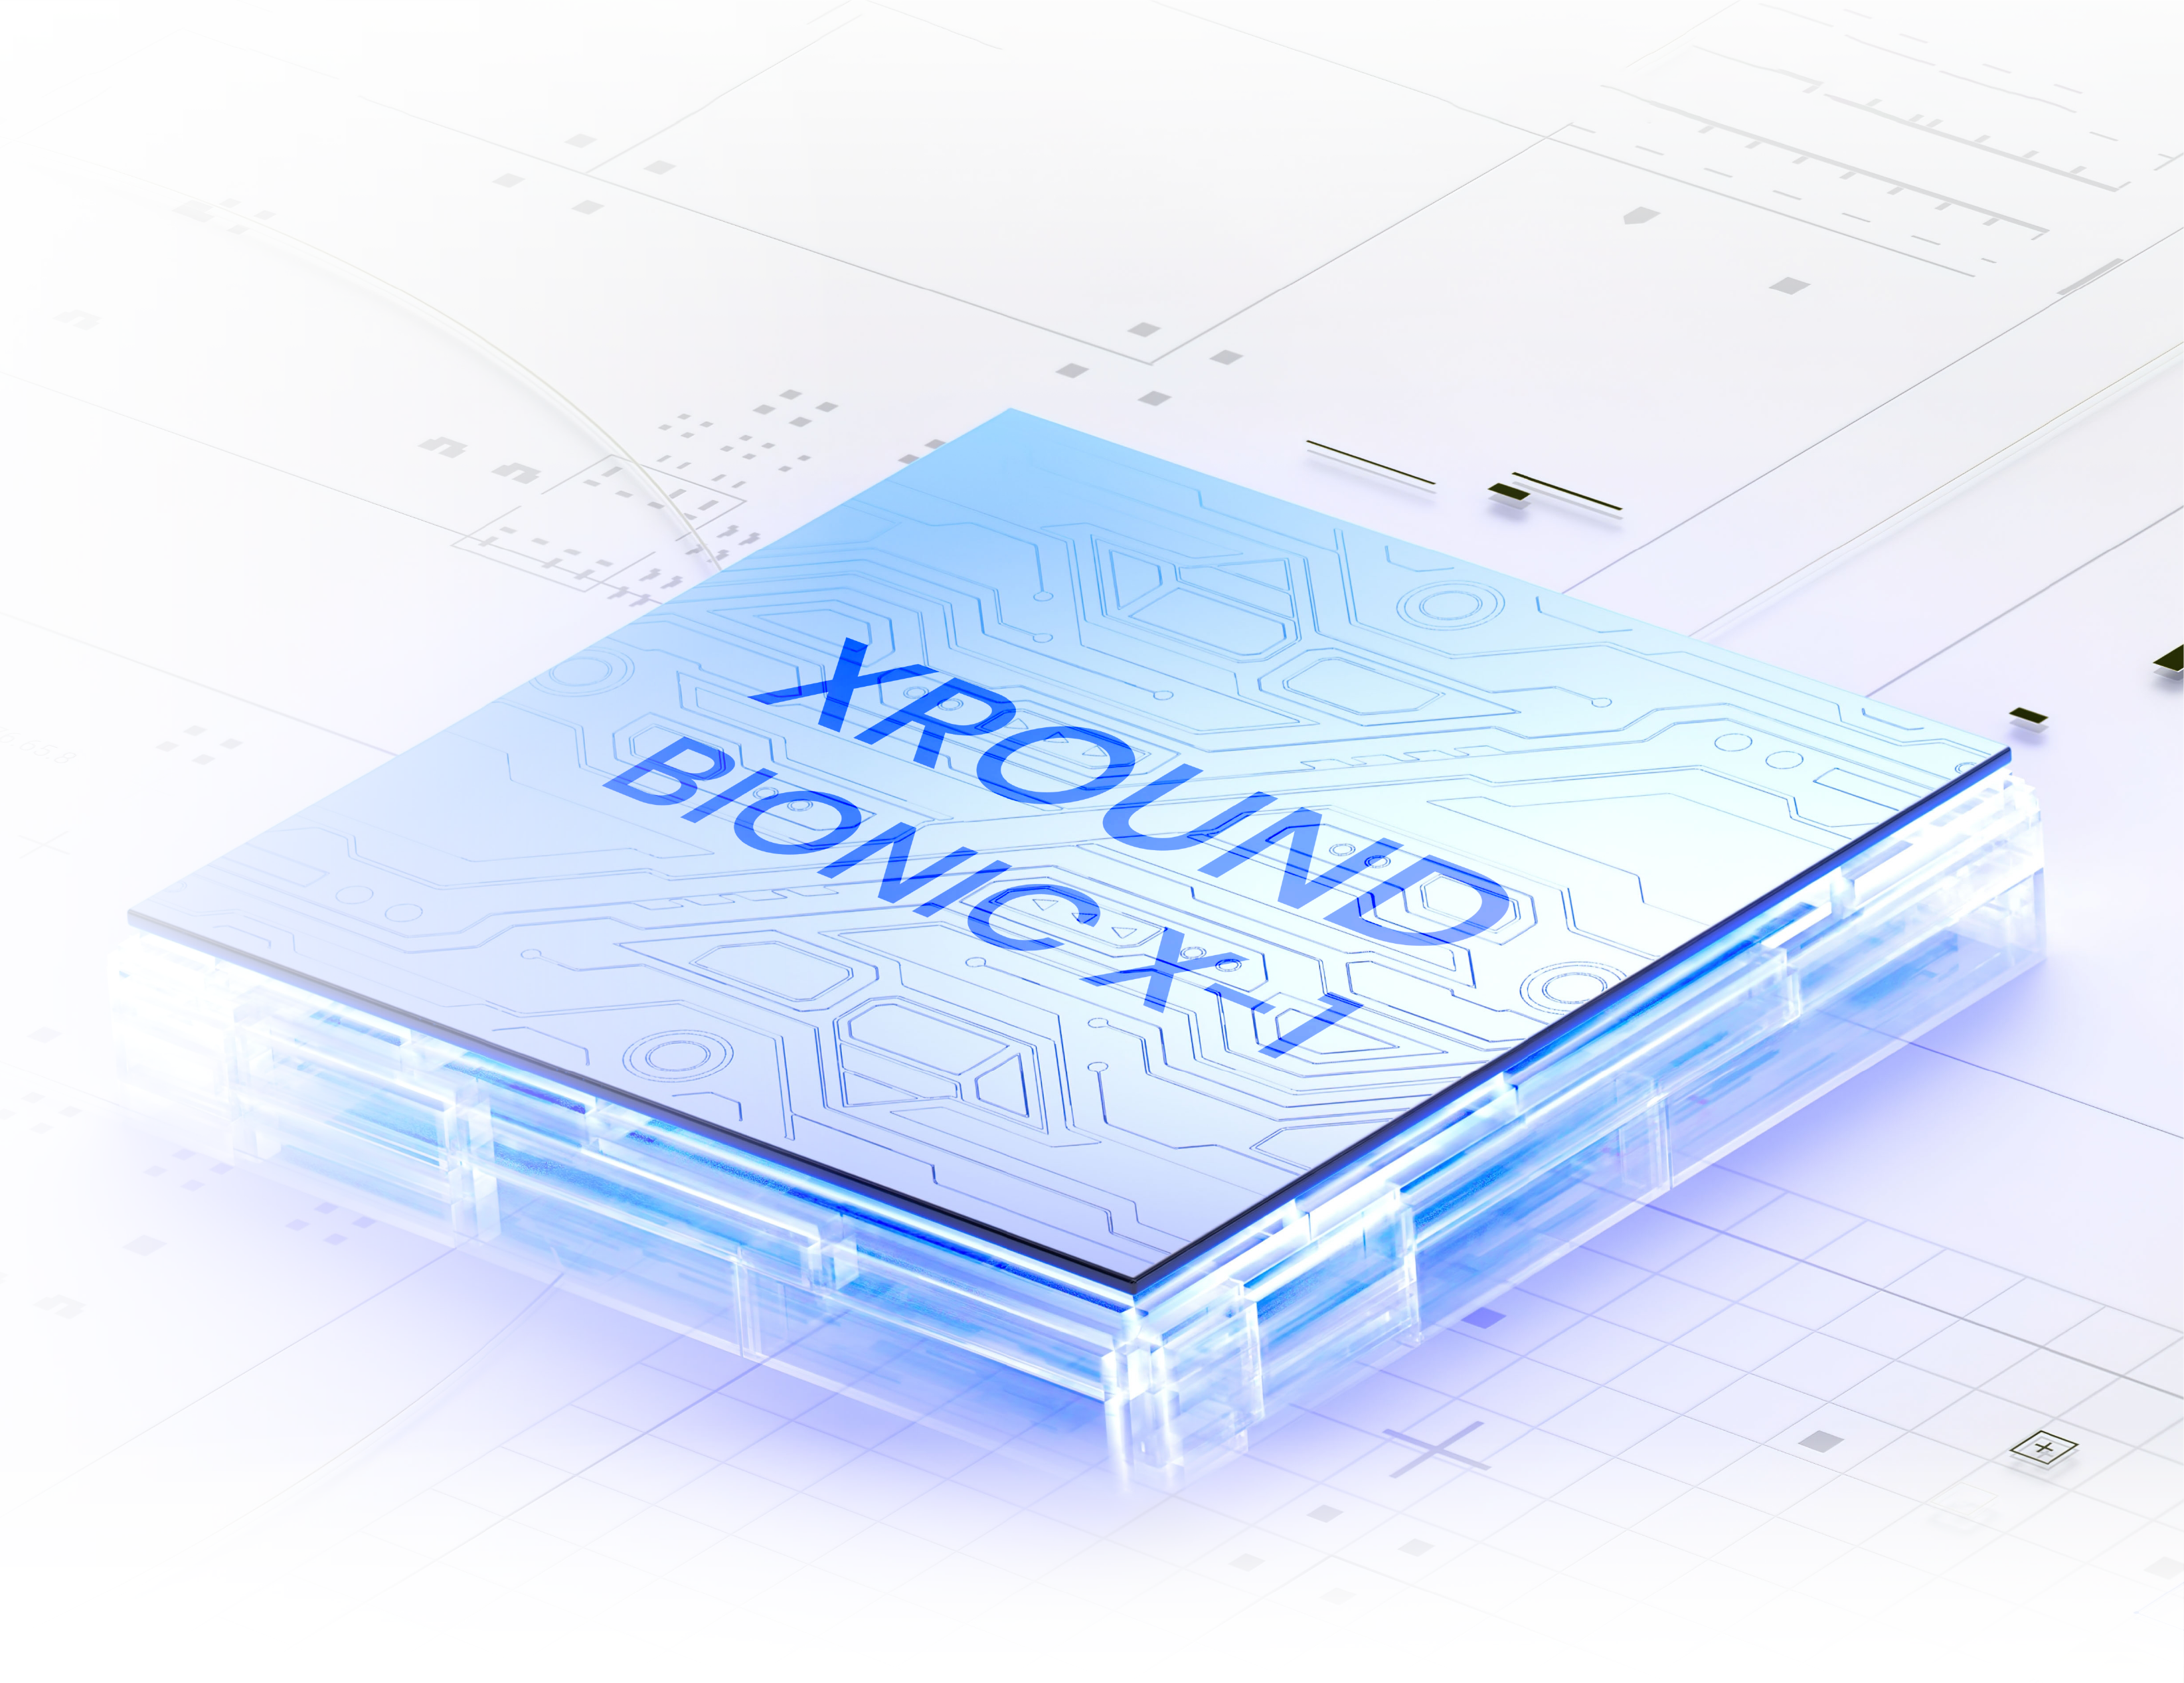 Xround bio AI chip